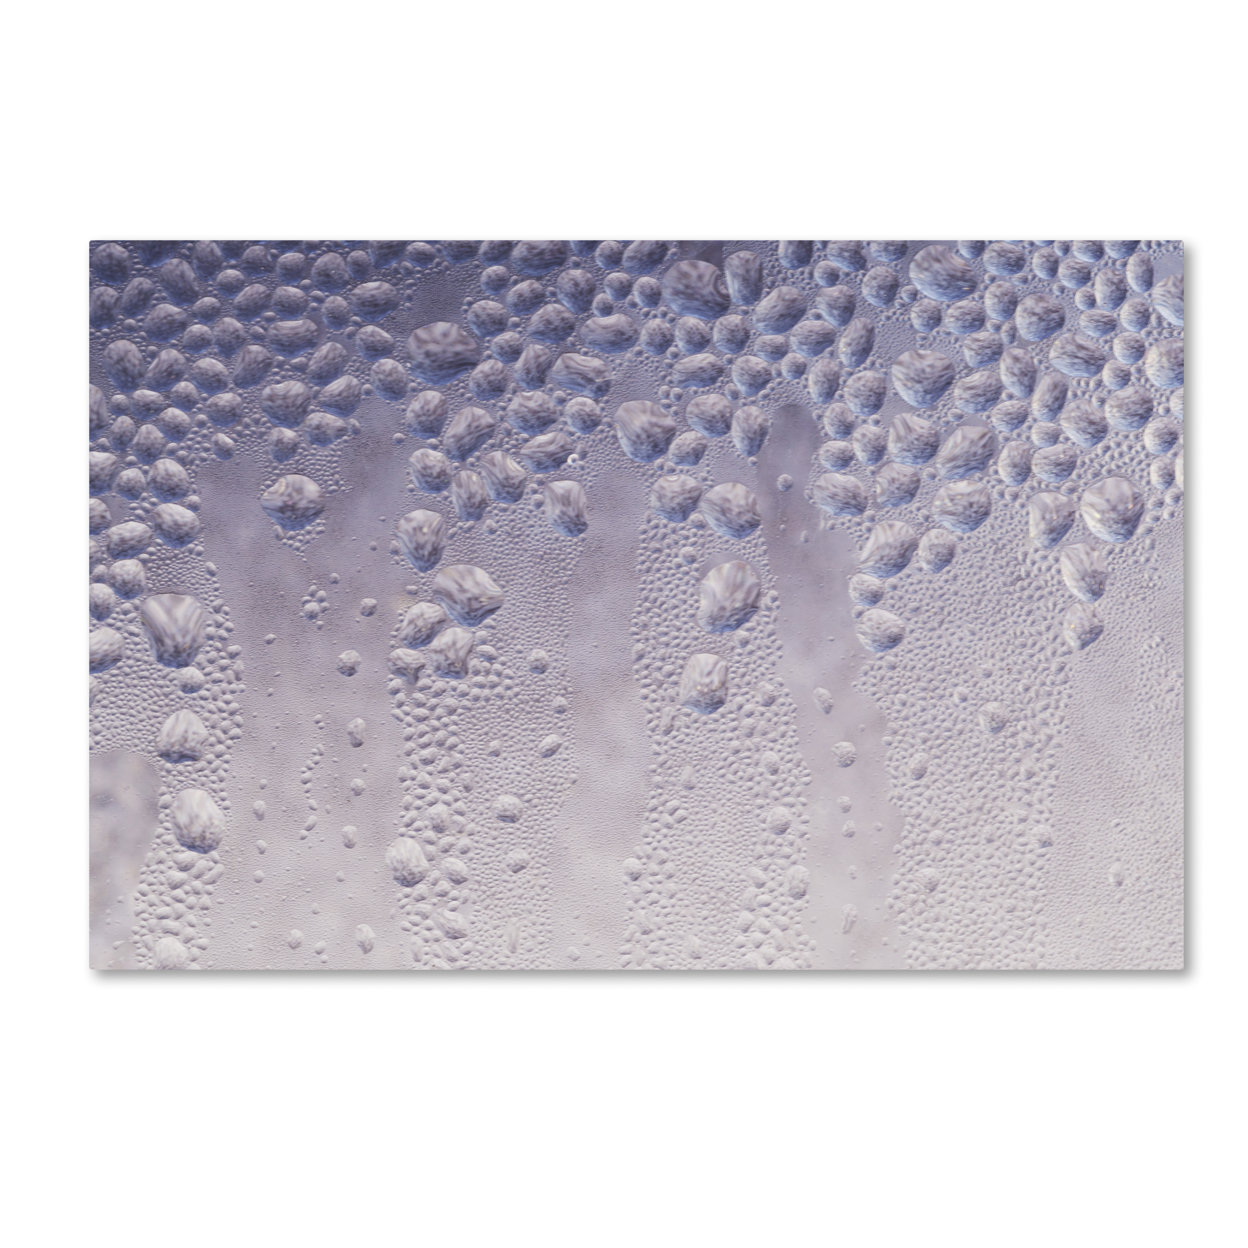 Kurt Shaffer 'Droplets Abstract On My Window' Canvas Art 16 X 24